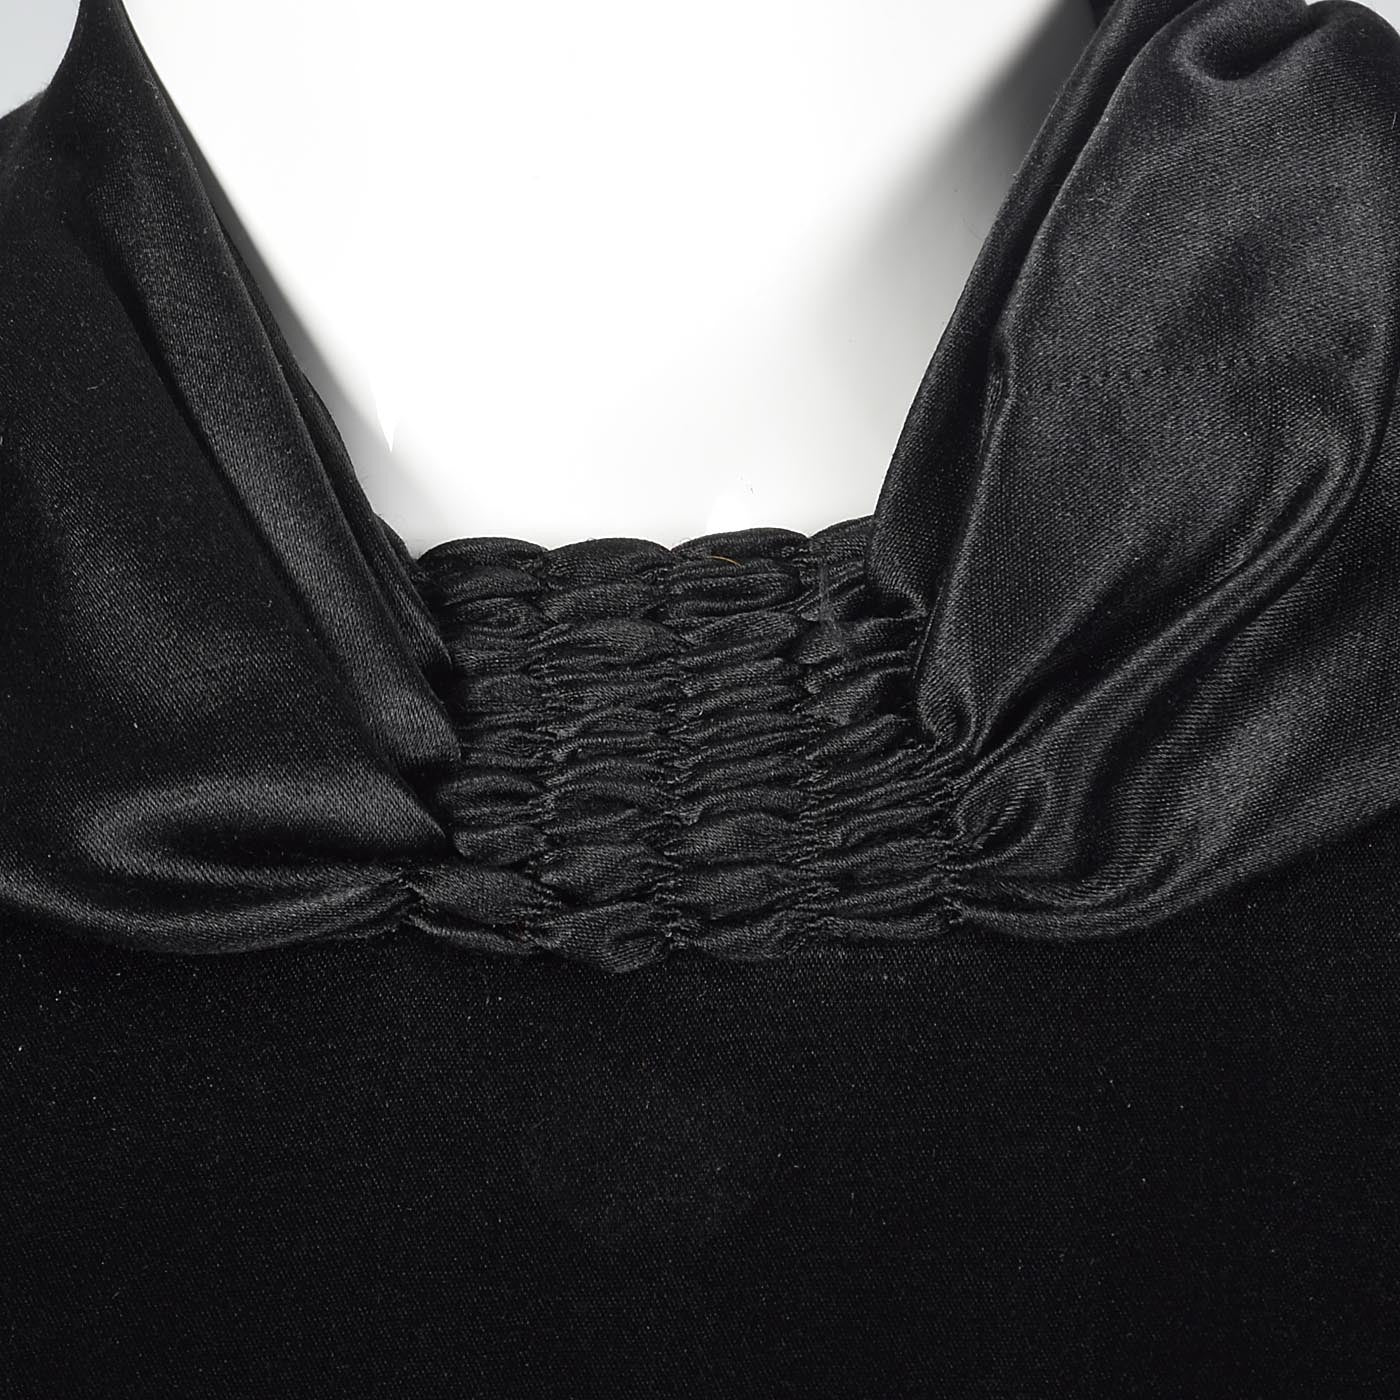 1980s Galanos Avant Garde Formal Black Gown